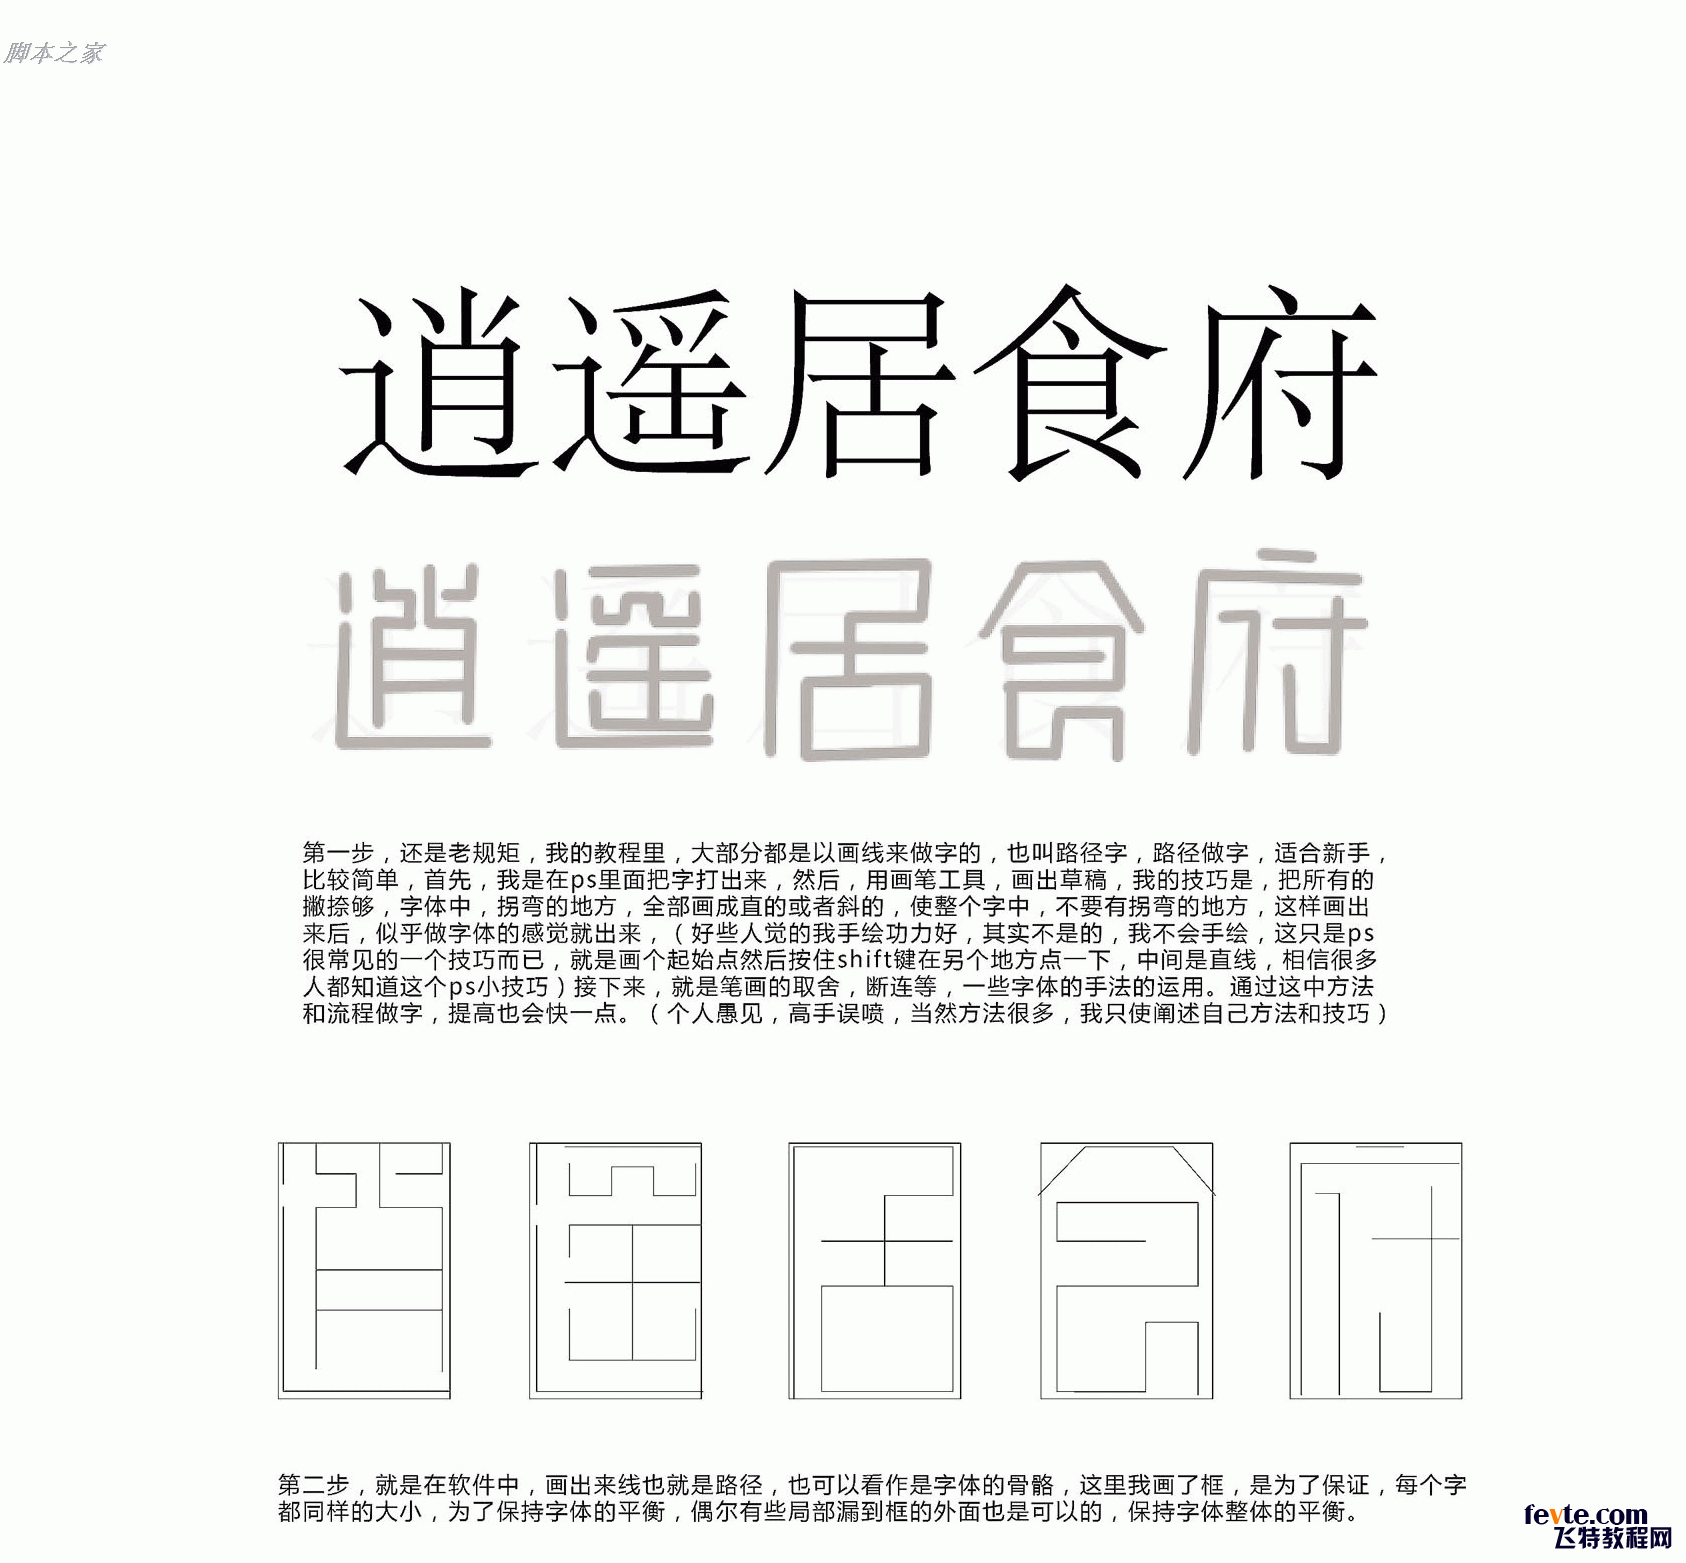 AI设计制作漂亮的中国风文字标志2